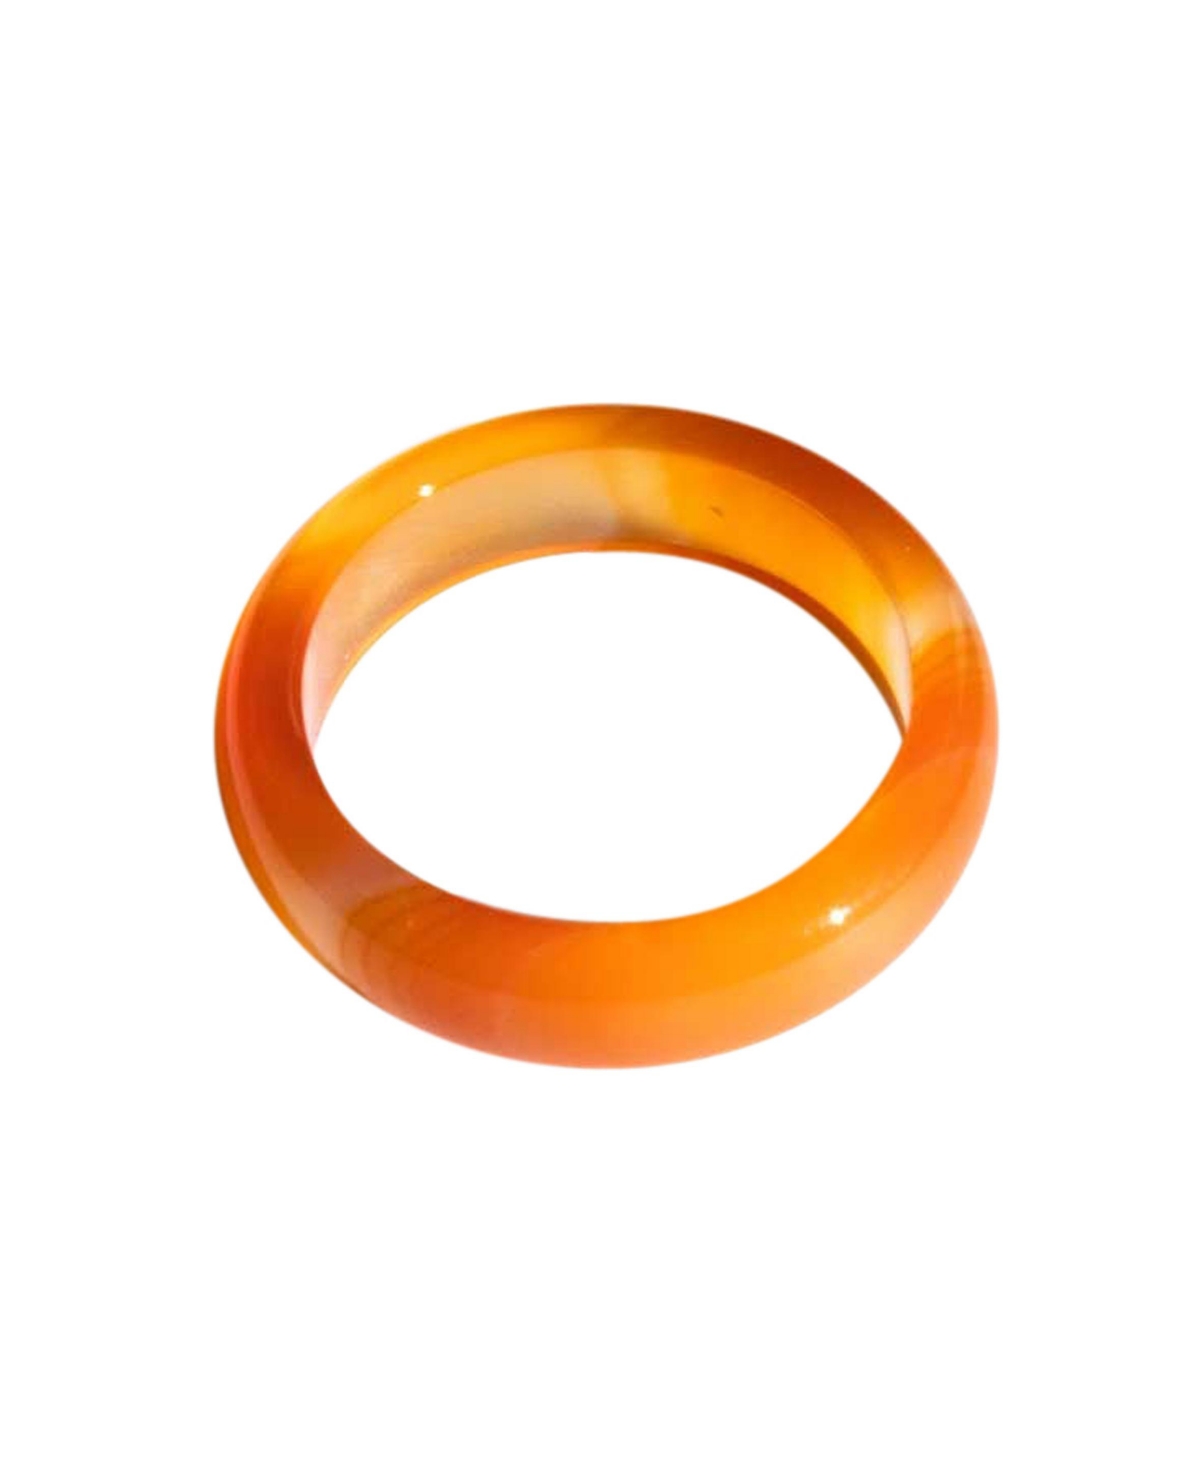 Persimmon - Dark orange jade stone ring - Red